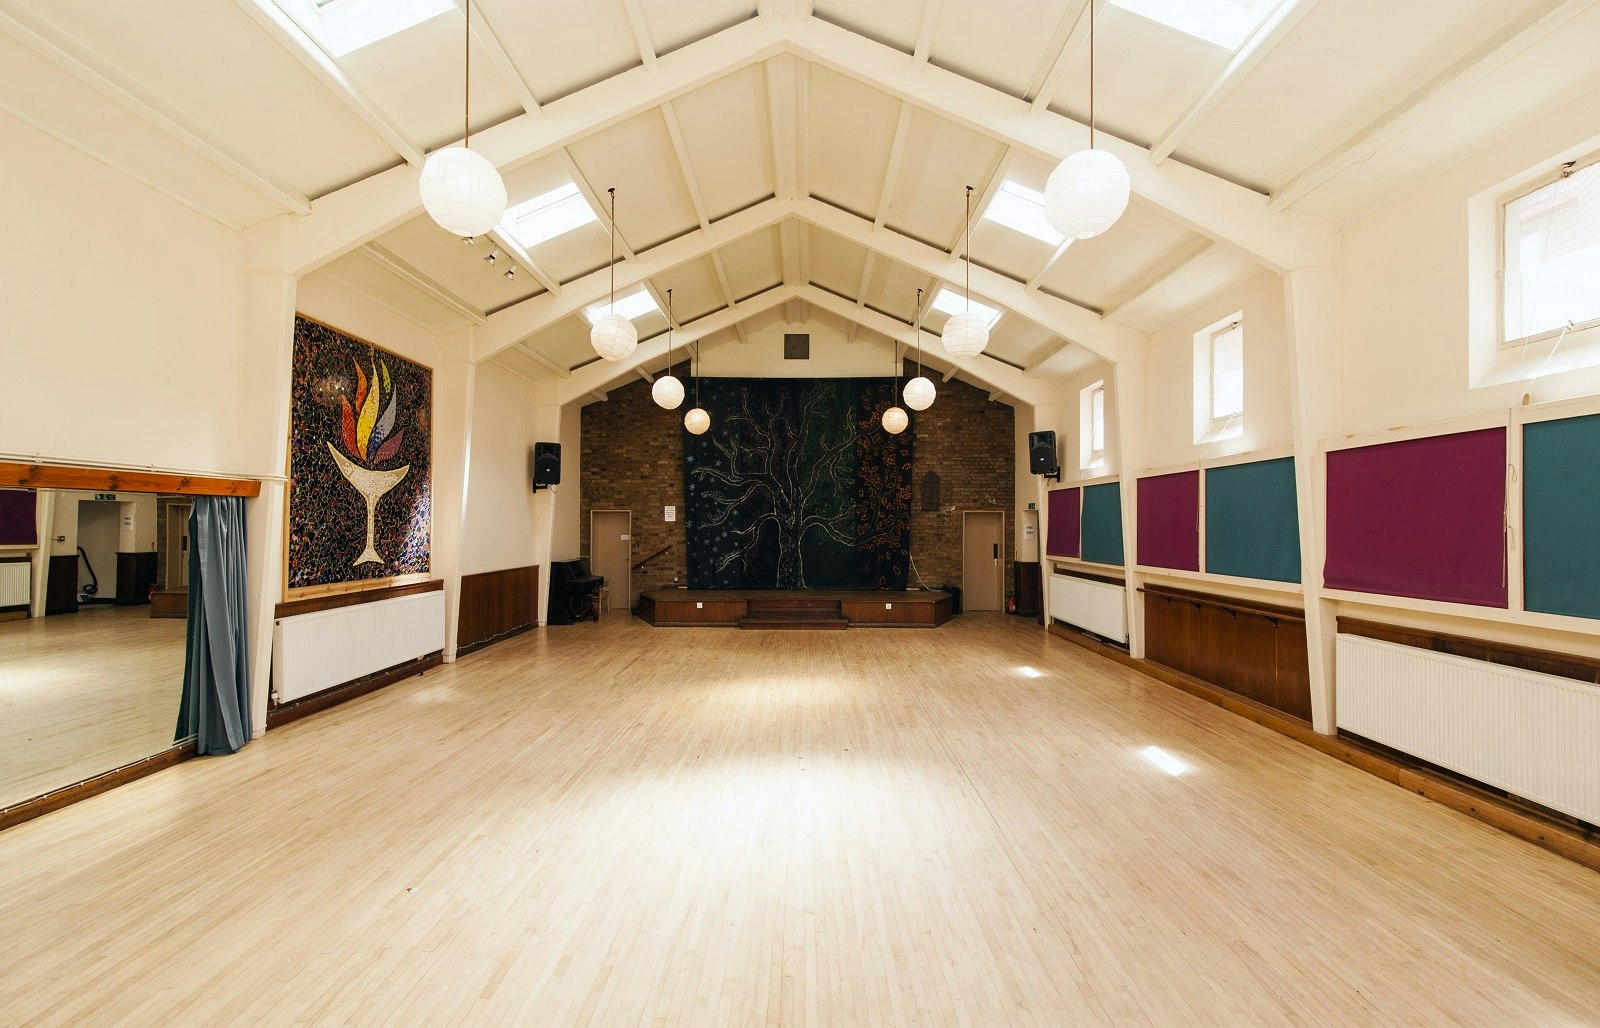 Unity Islington - Large Hall image 4